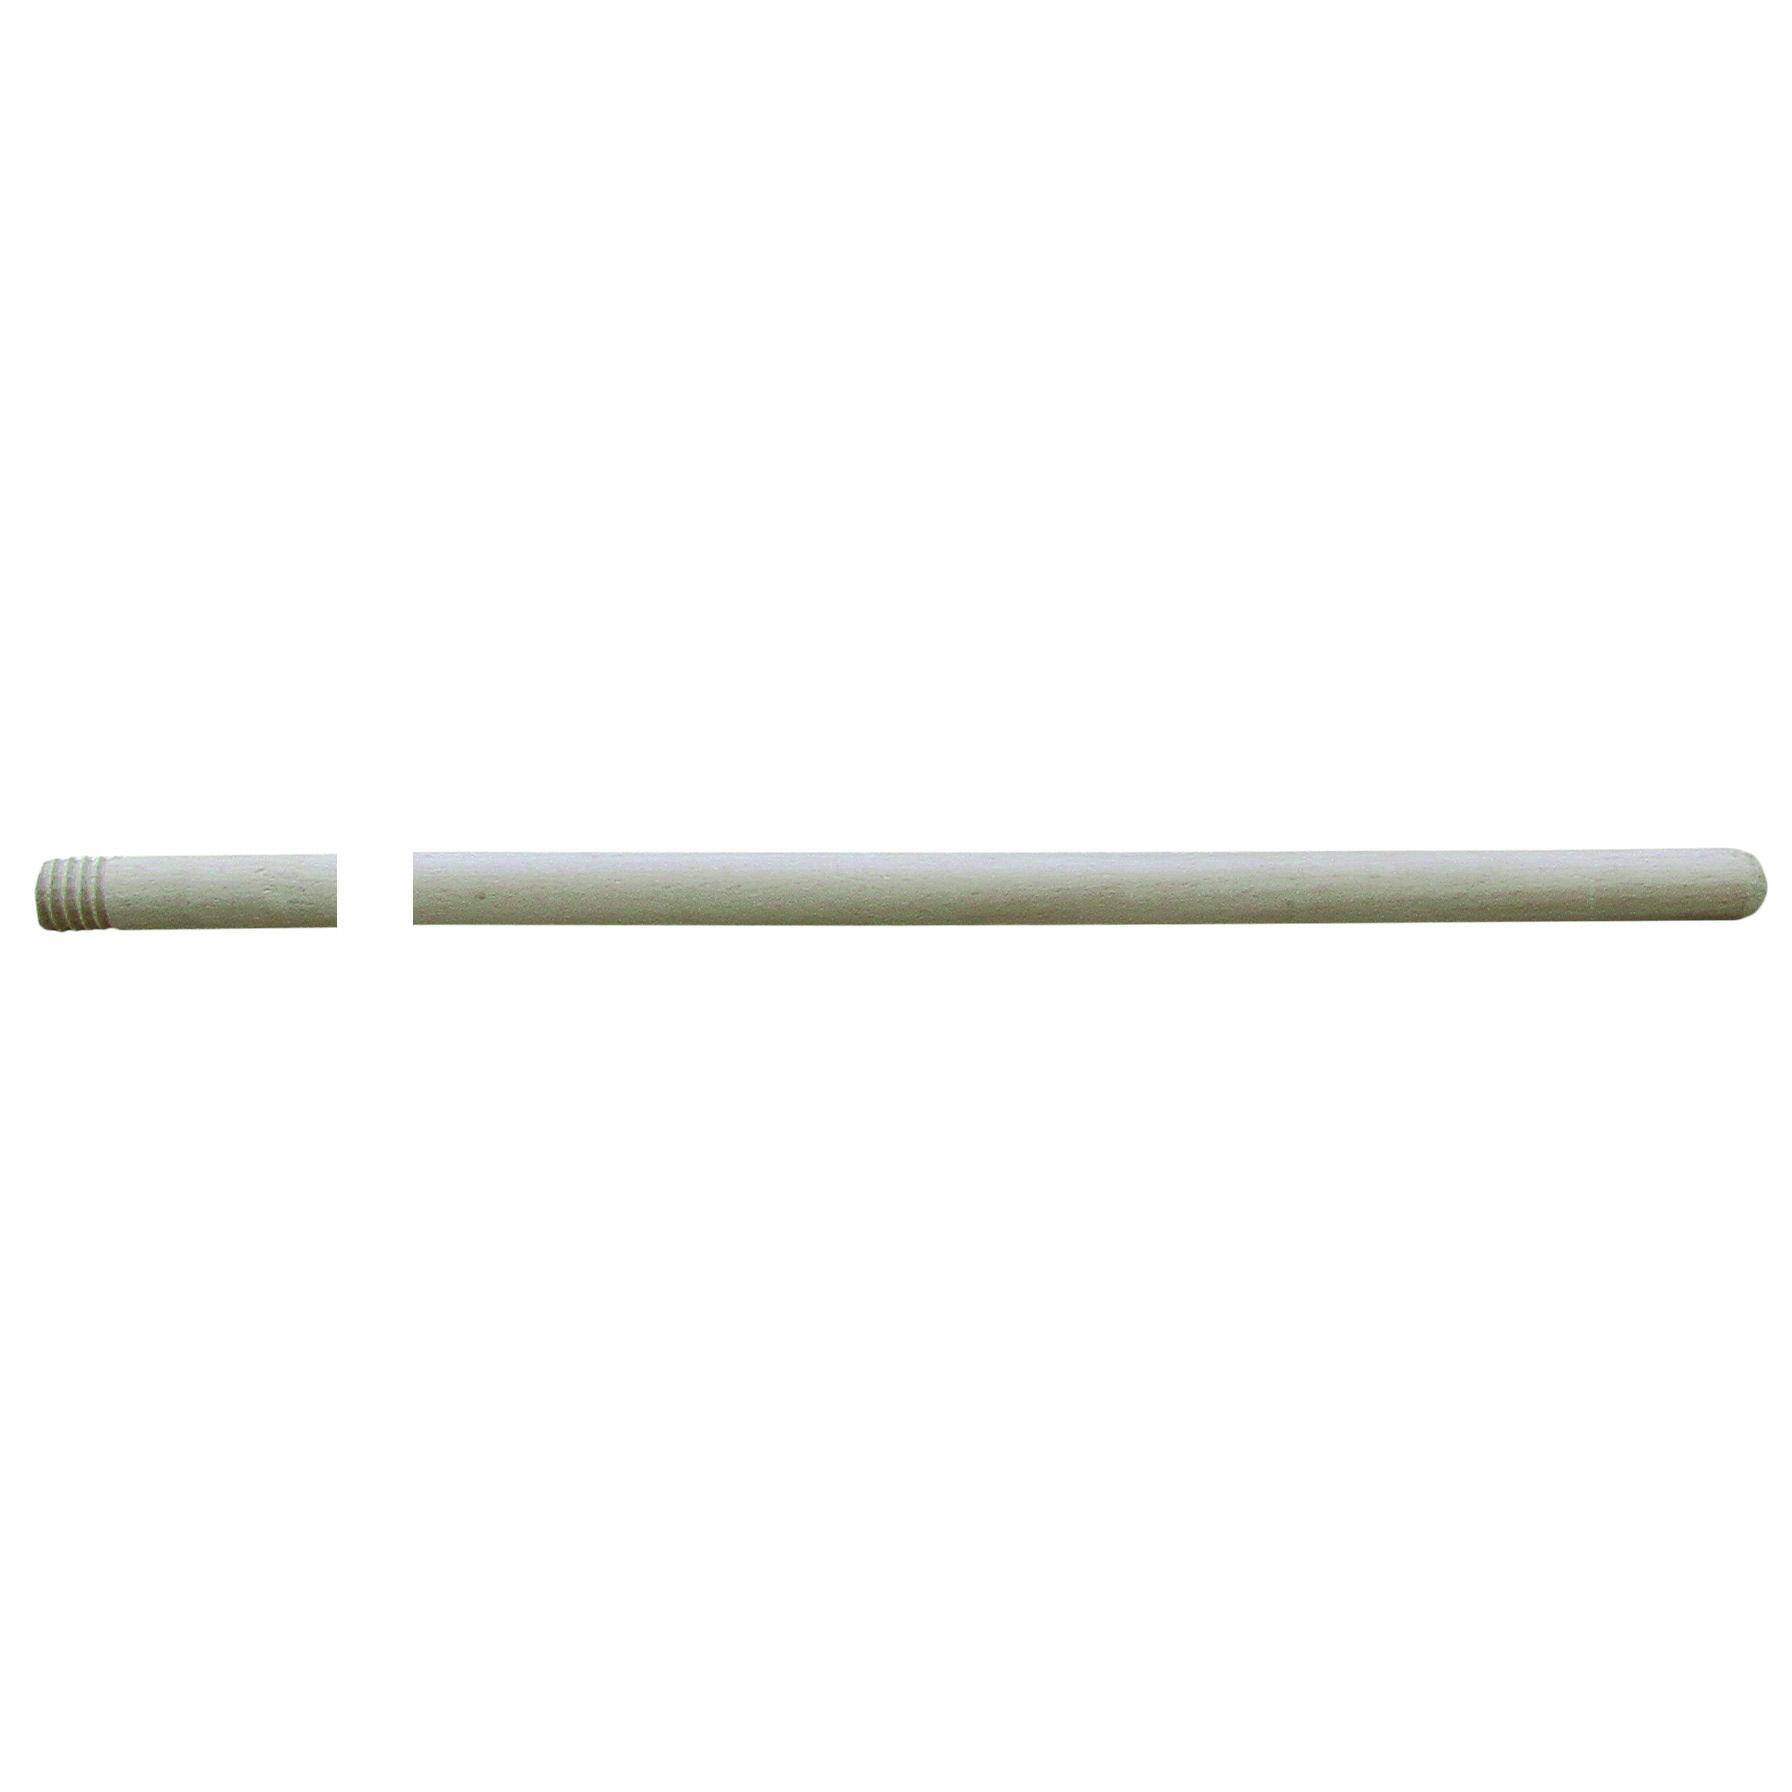 Pole for street broom 180 cm